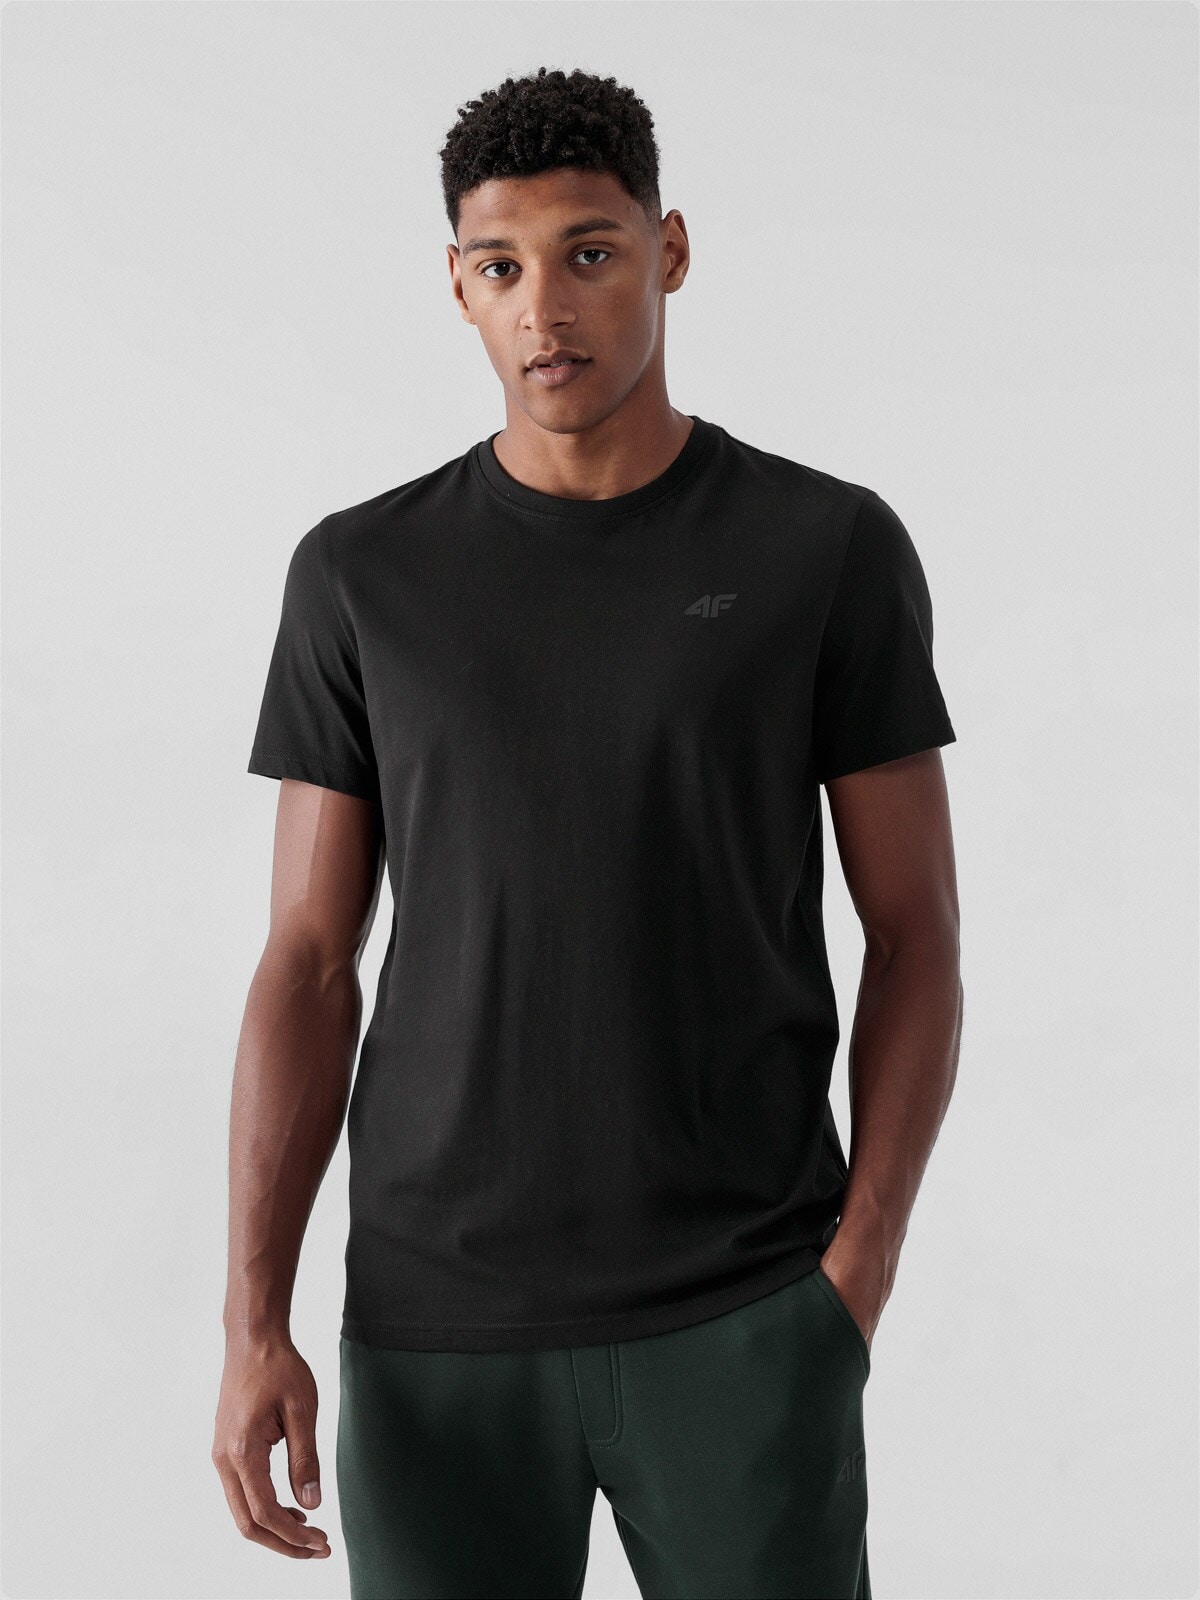 4F Men's T-shirt Fashion Sport Tee Casual Lifestyle Clothing NOSH4-TSM003-20S